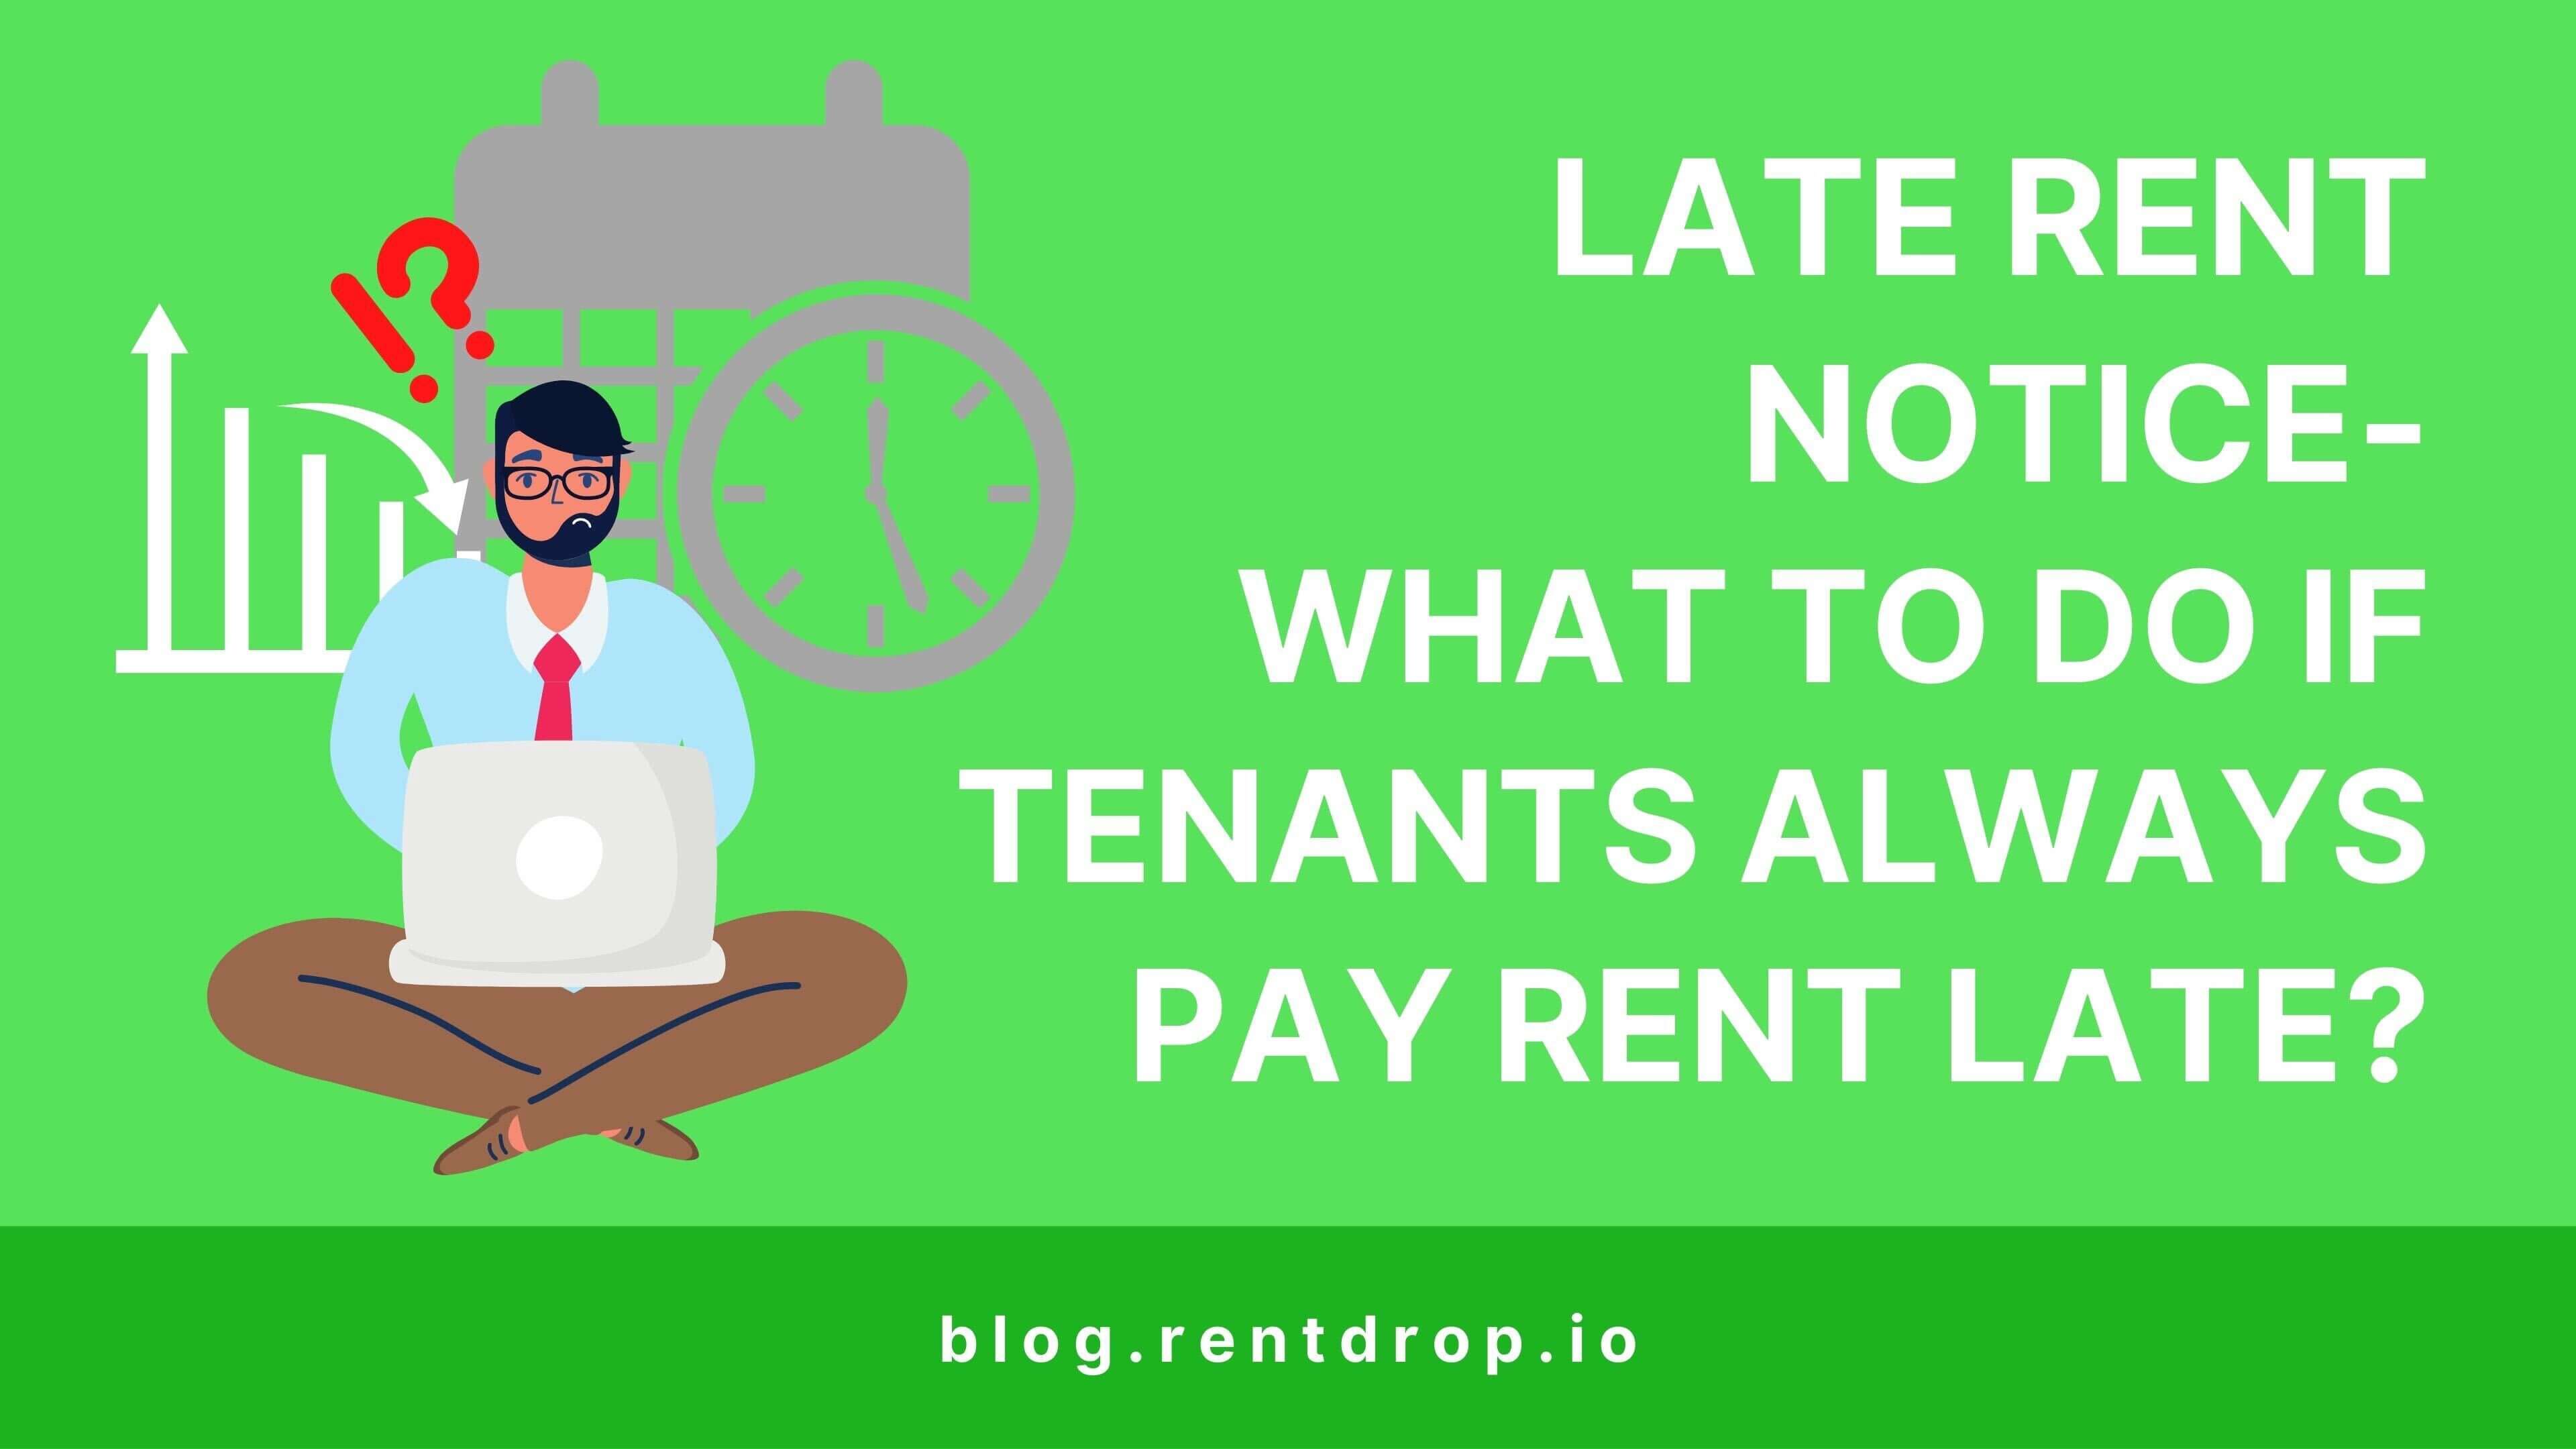 7 Common Issues Between Landlords and Tenants - Vander Law